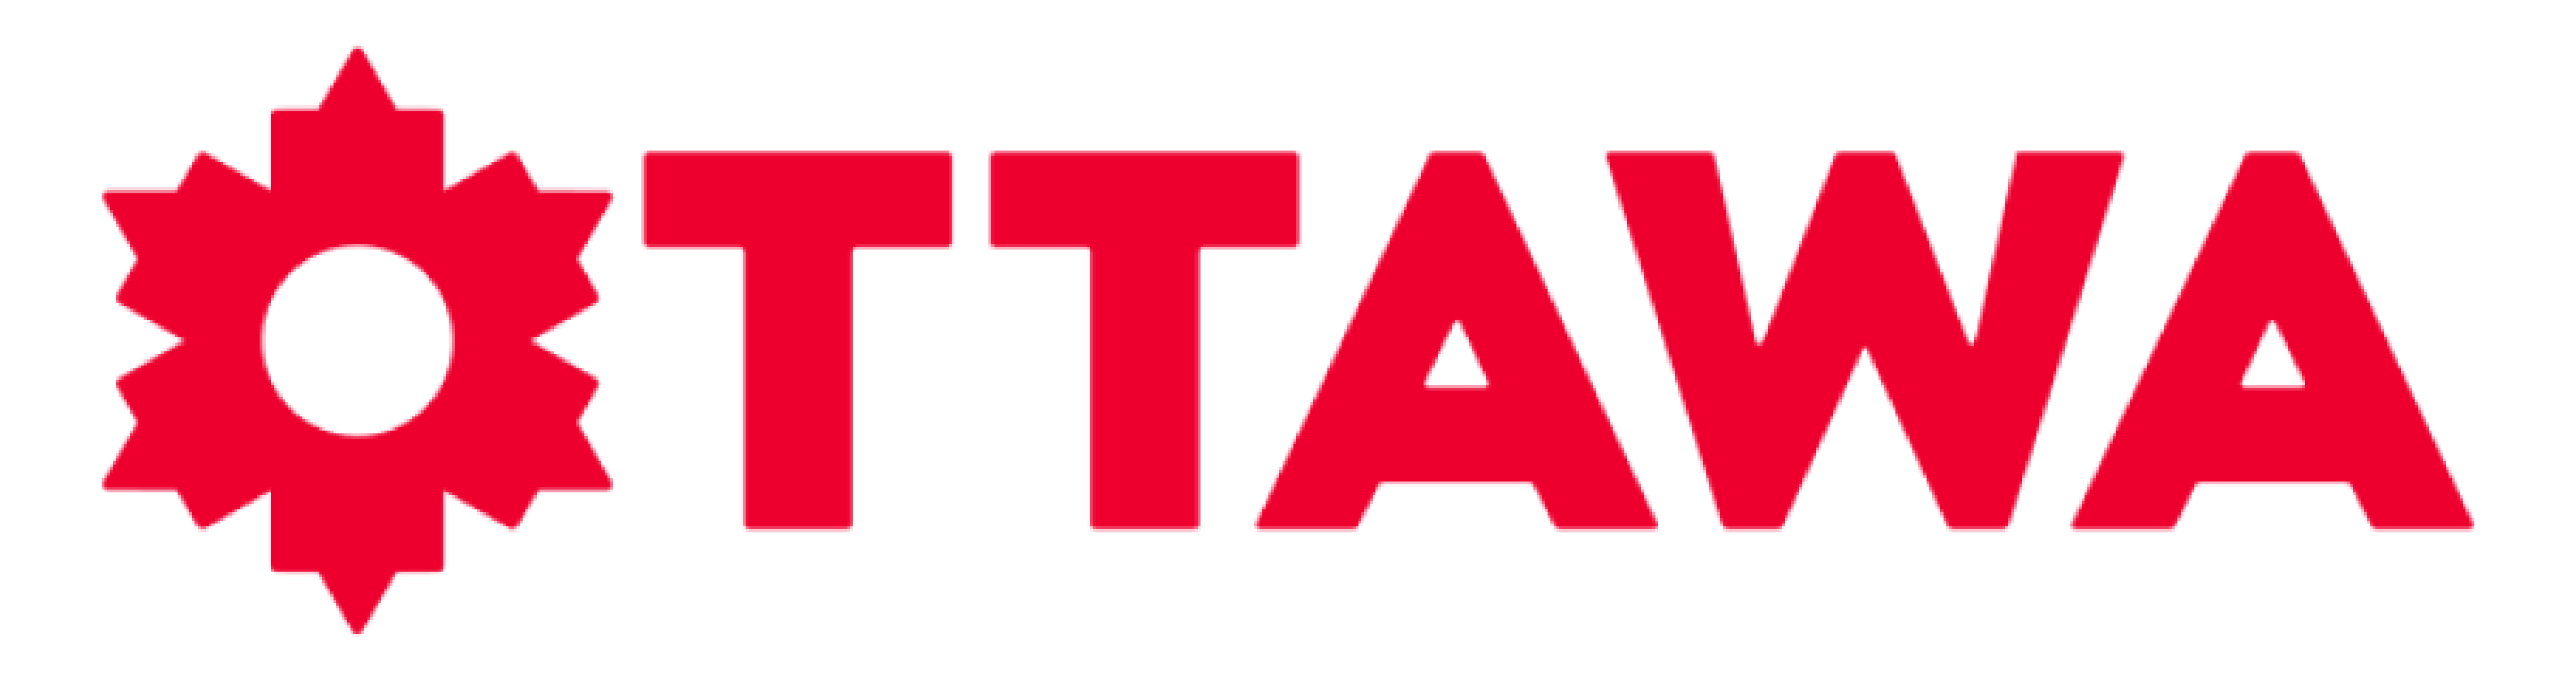 Ottawa Tourism Red Logo